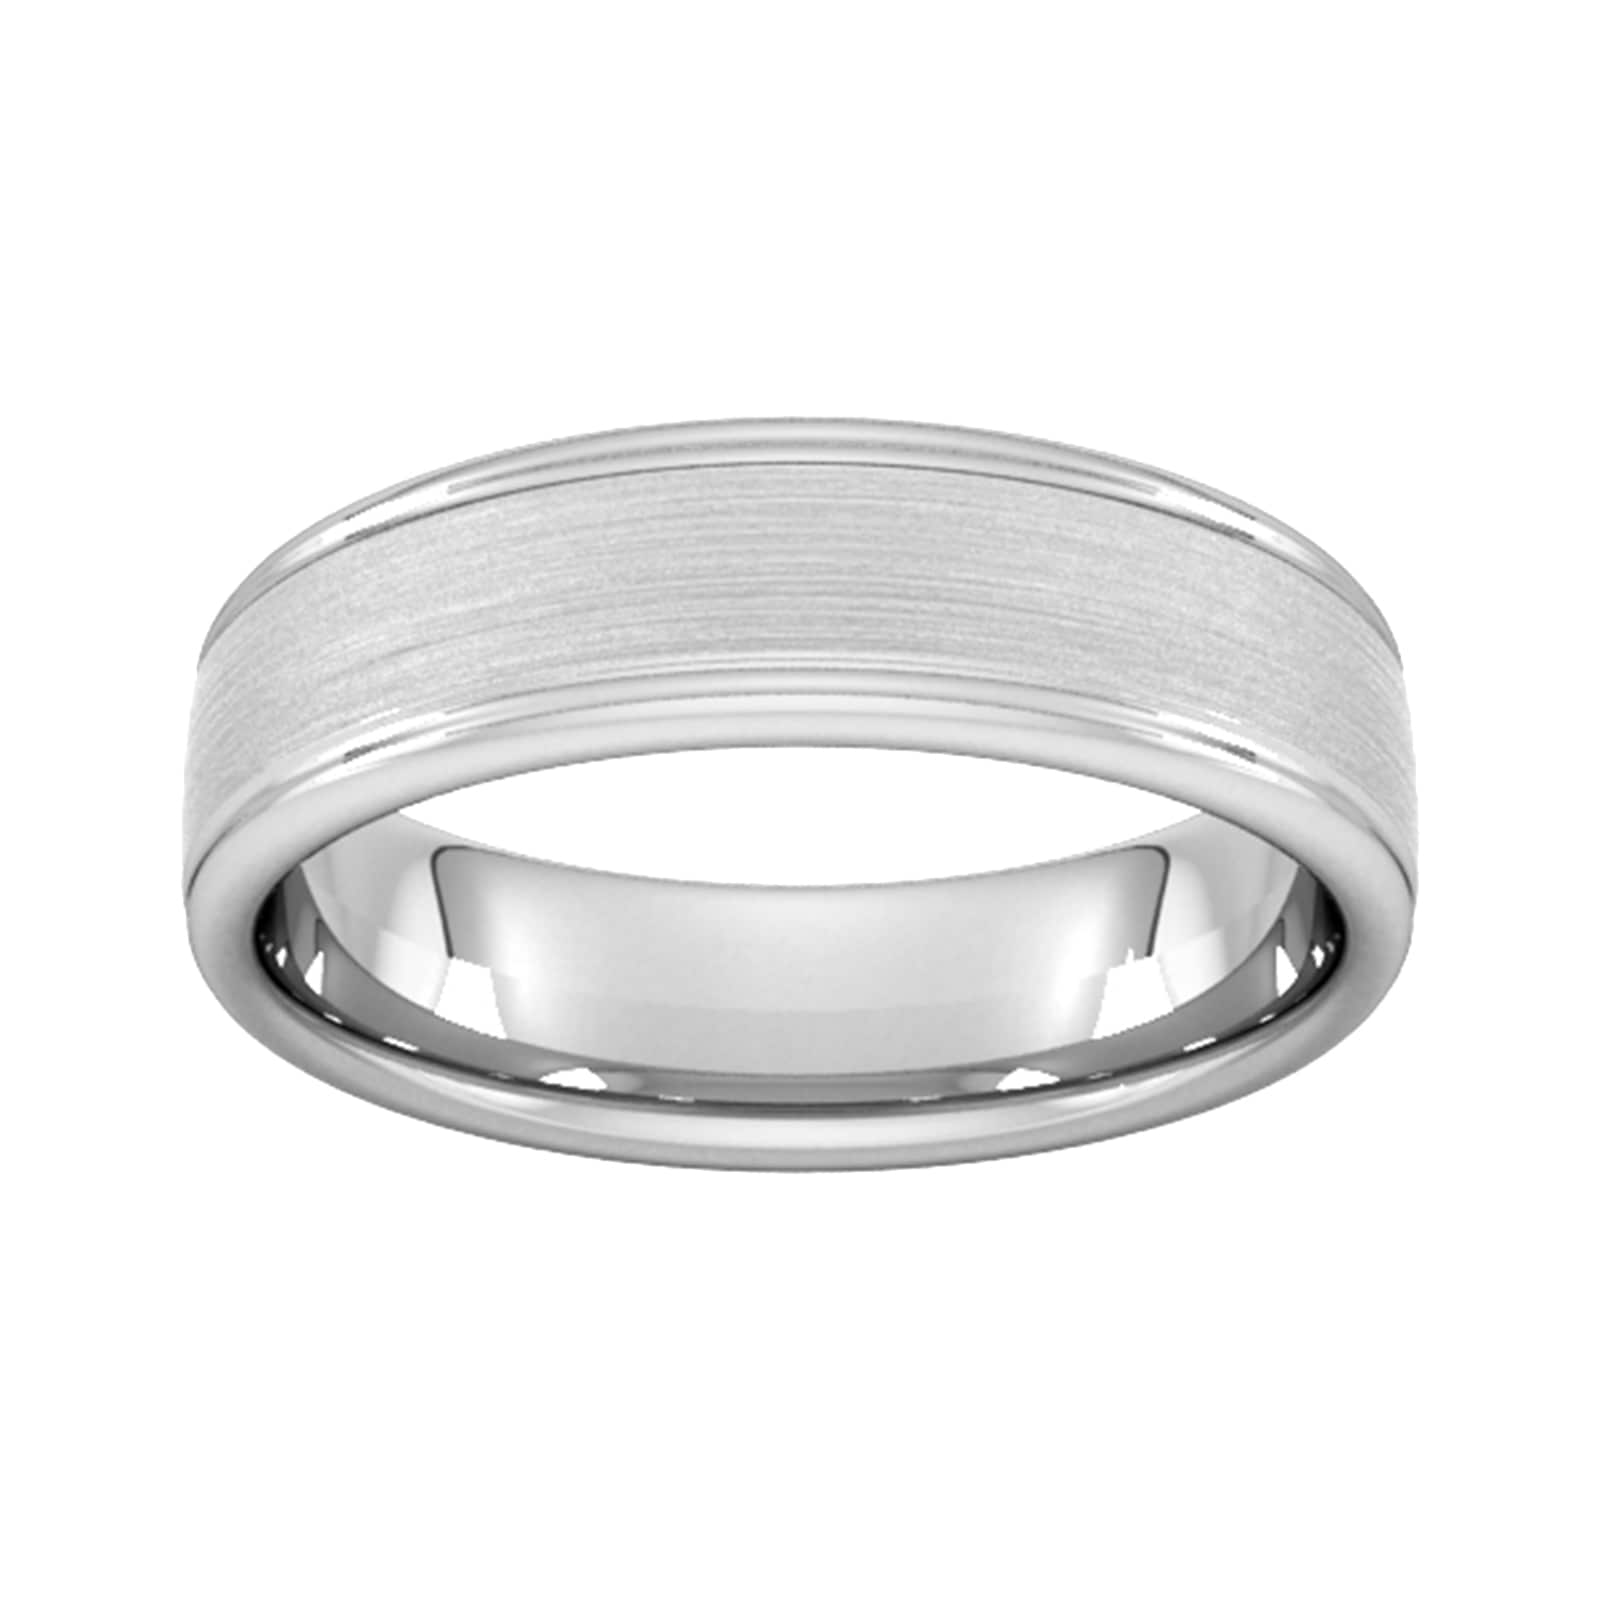 6mm Slight Court Standard Matt Centre With Grooves Wedding Ring In 950 Palladium - Ring Size I